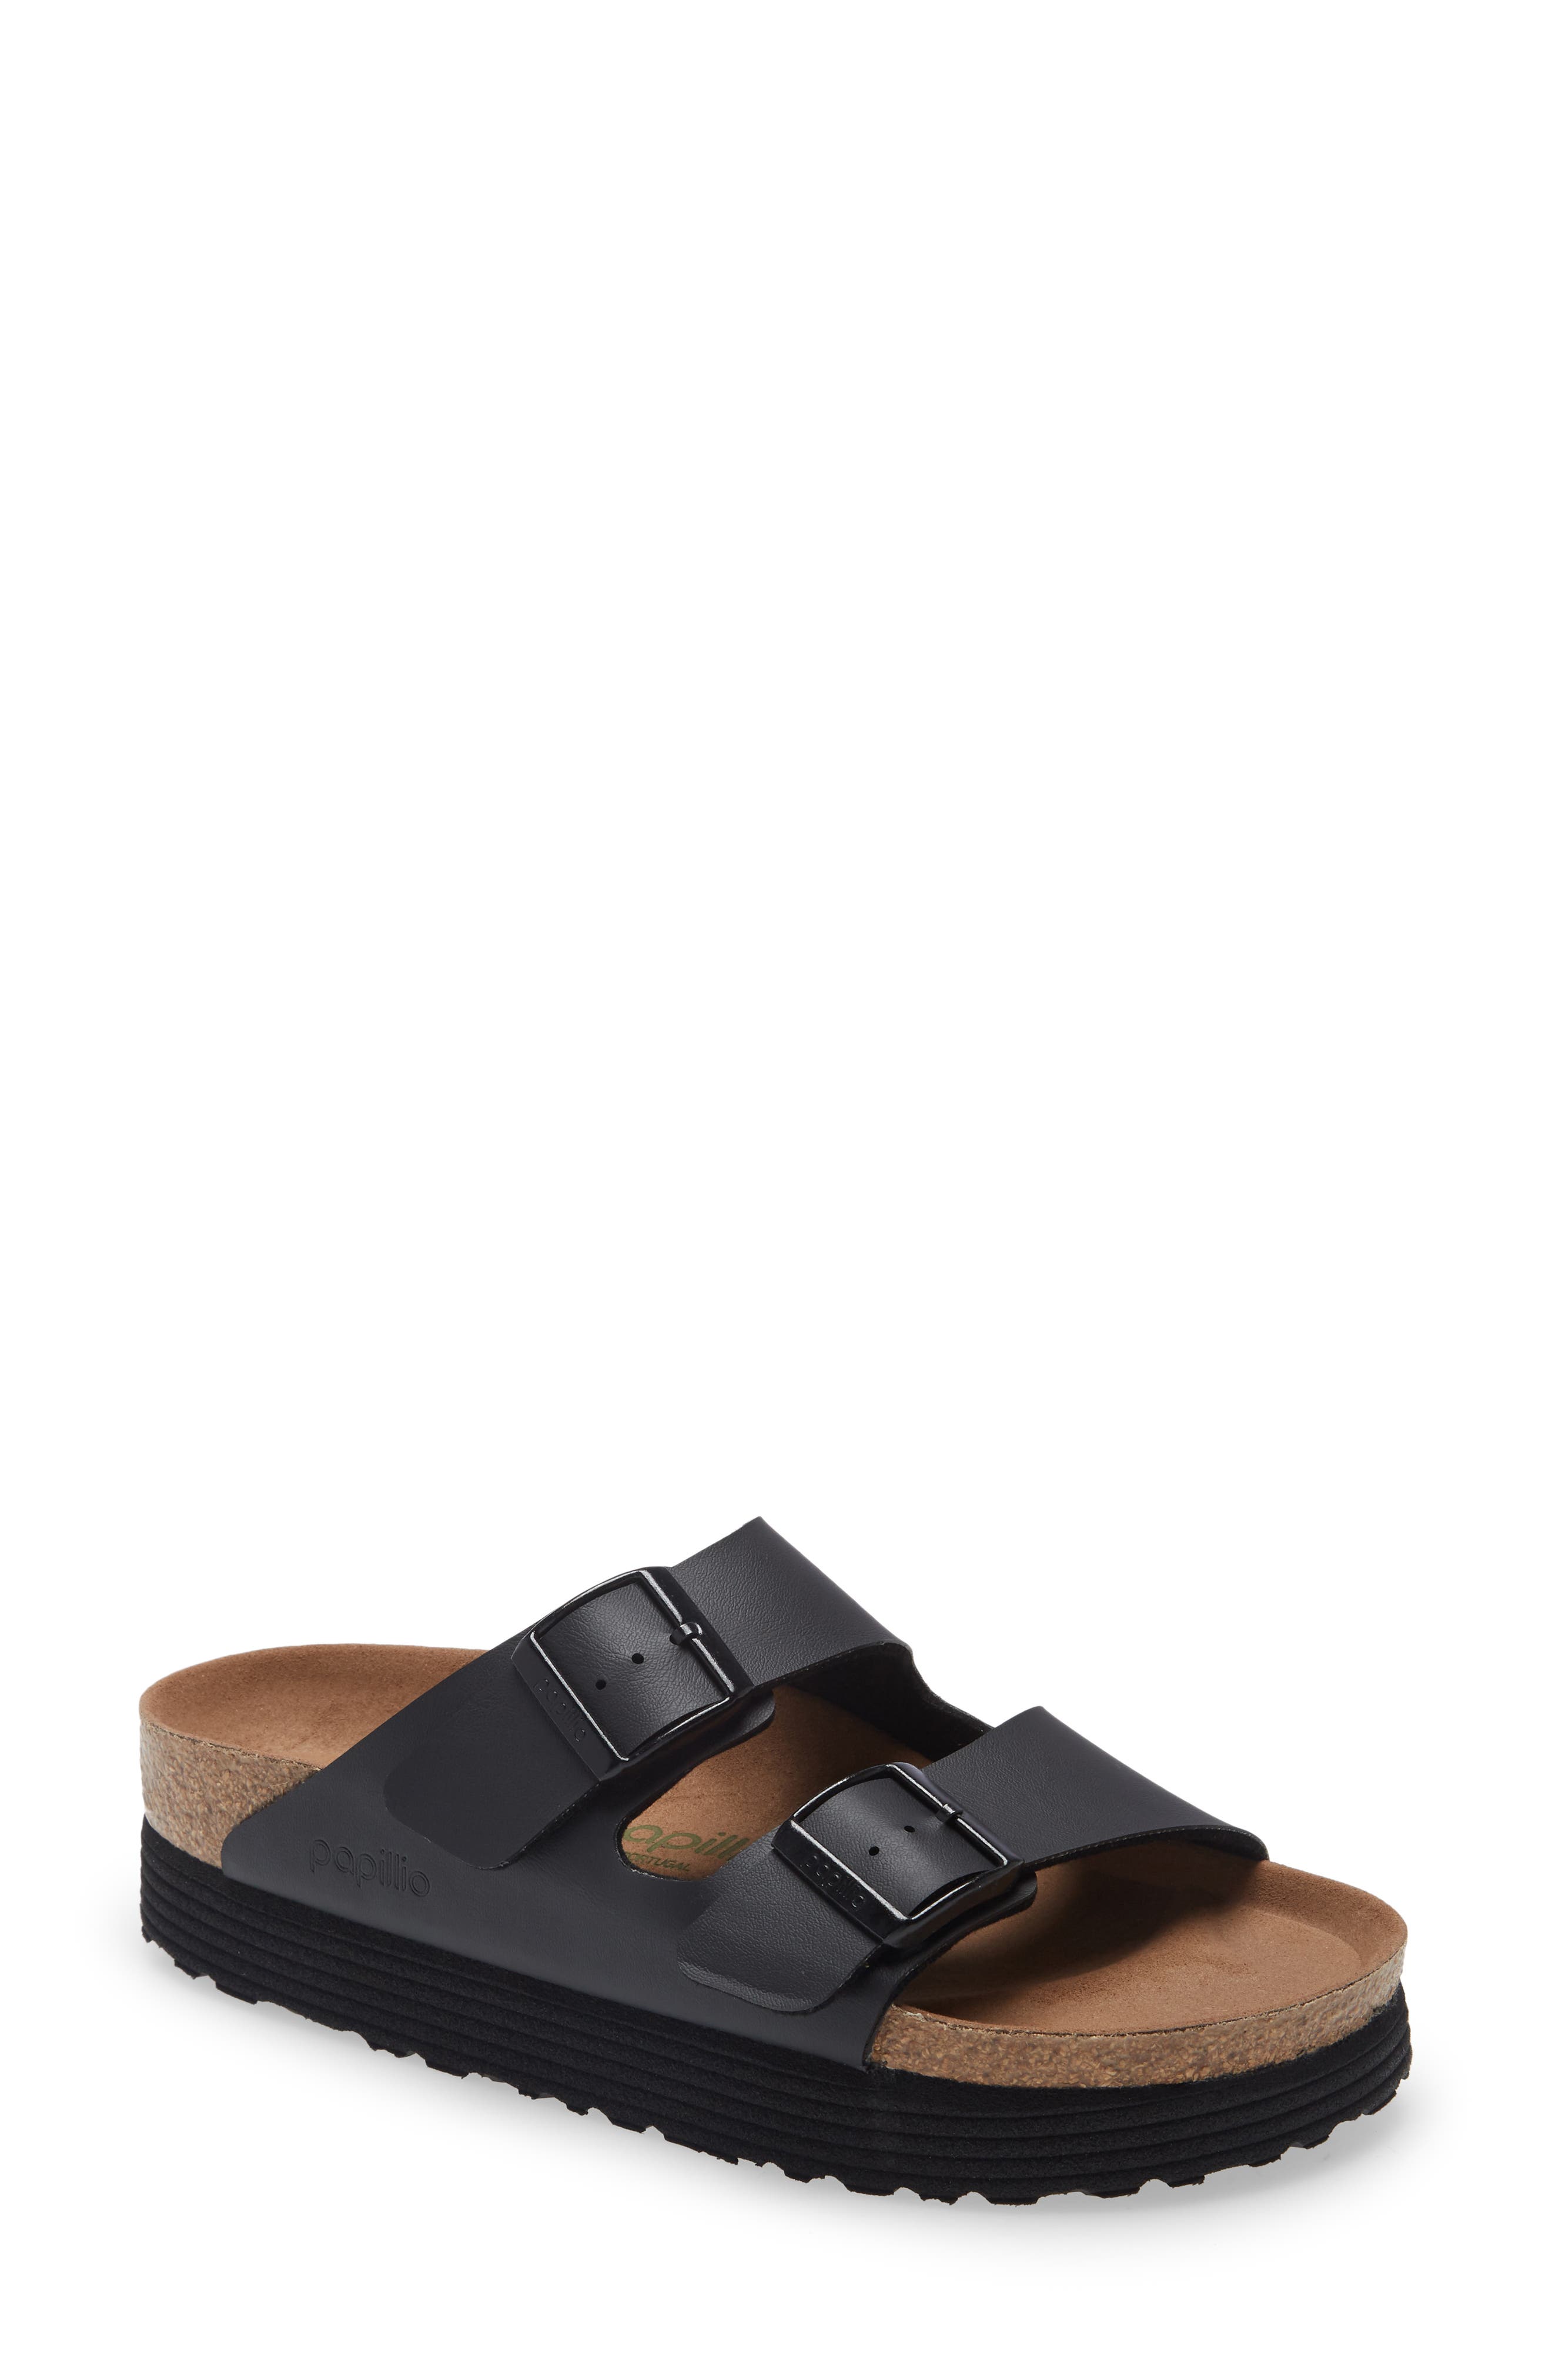 Papillio by Birkenstock Arizona Birko-Flor(TM) Slide Sandal in Black Faux Leather at Nordstrom, Size 10-10.5Us